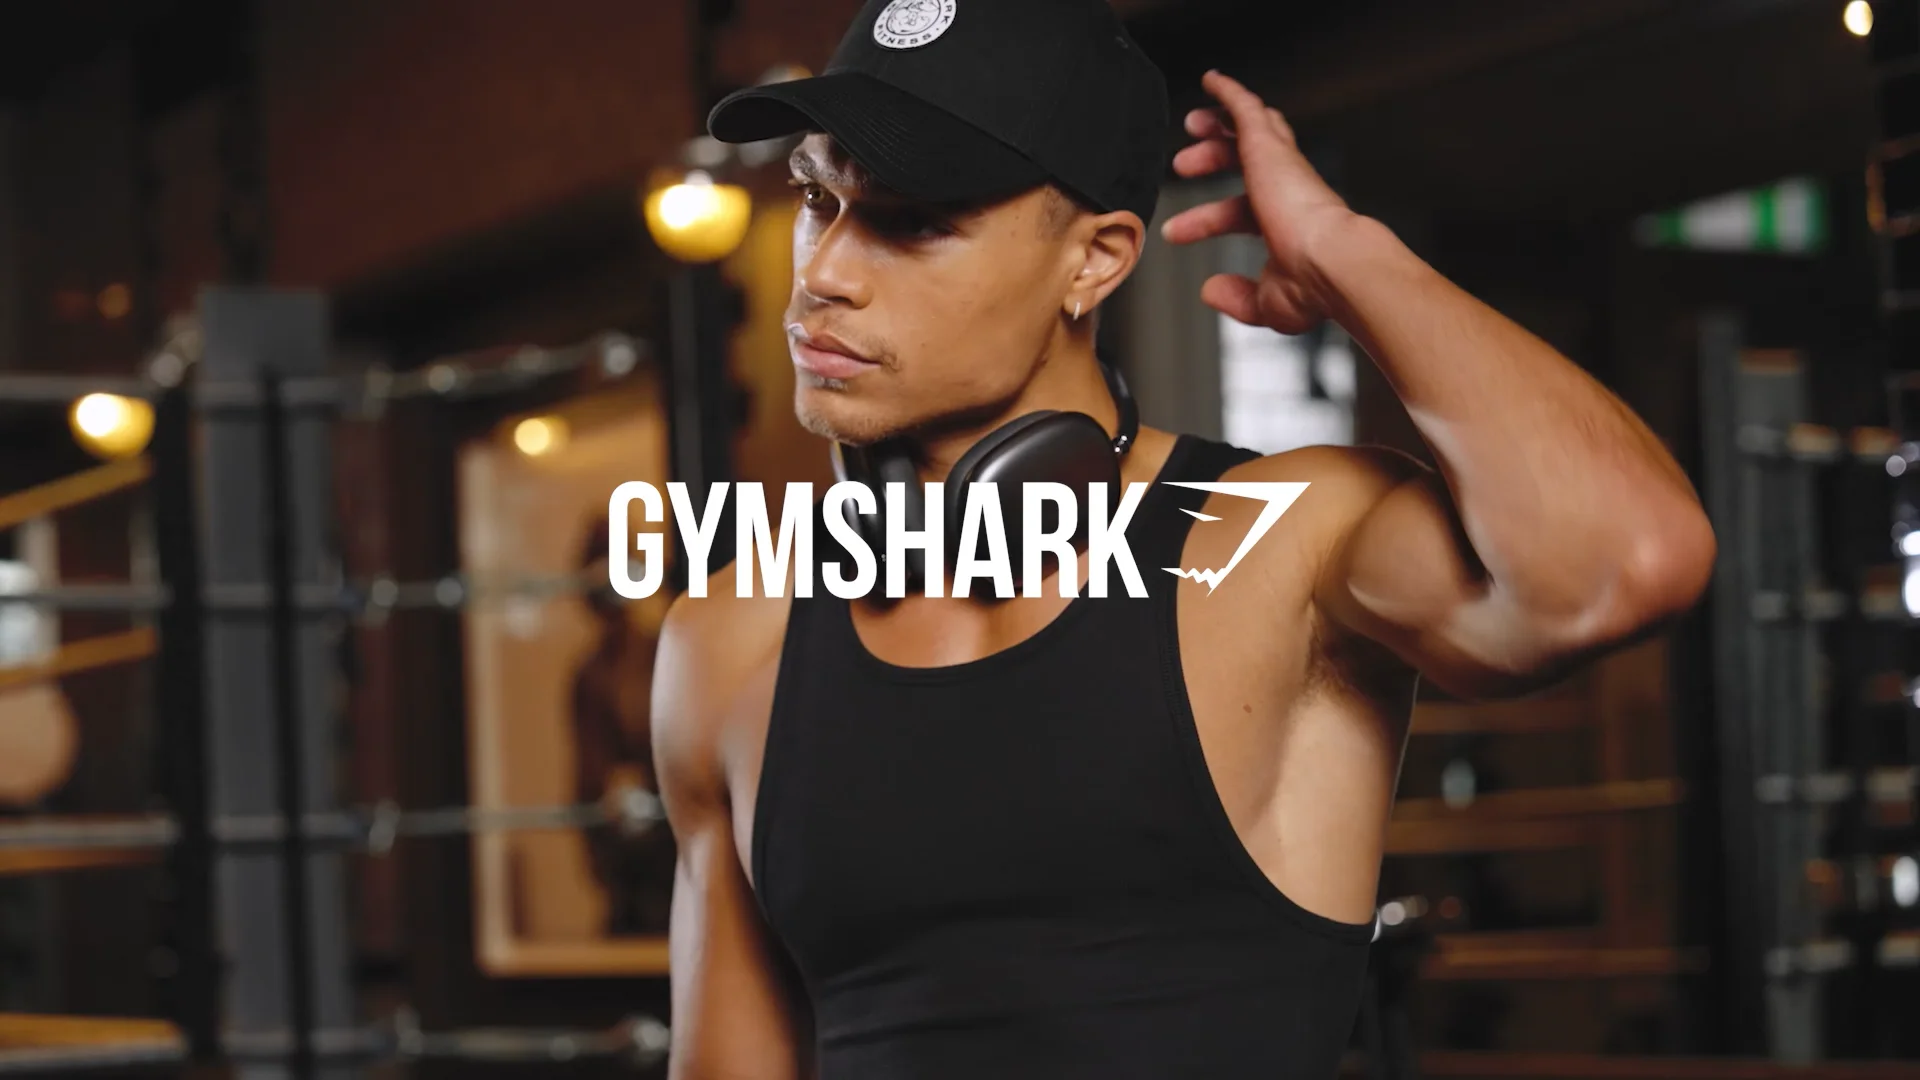 Gymshark - Together (Director's Cut) on Vimeo